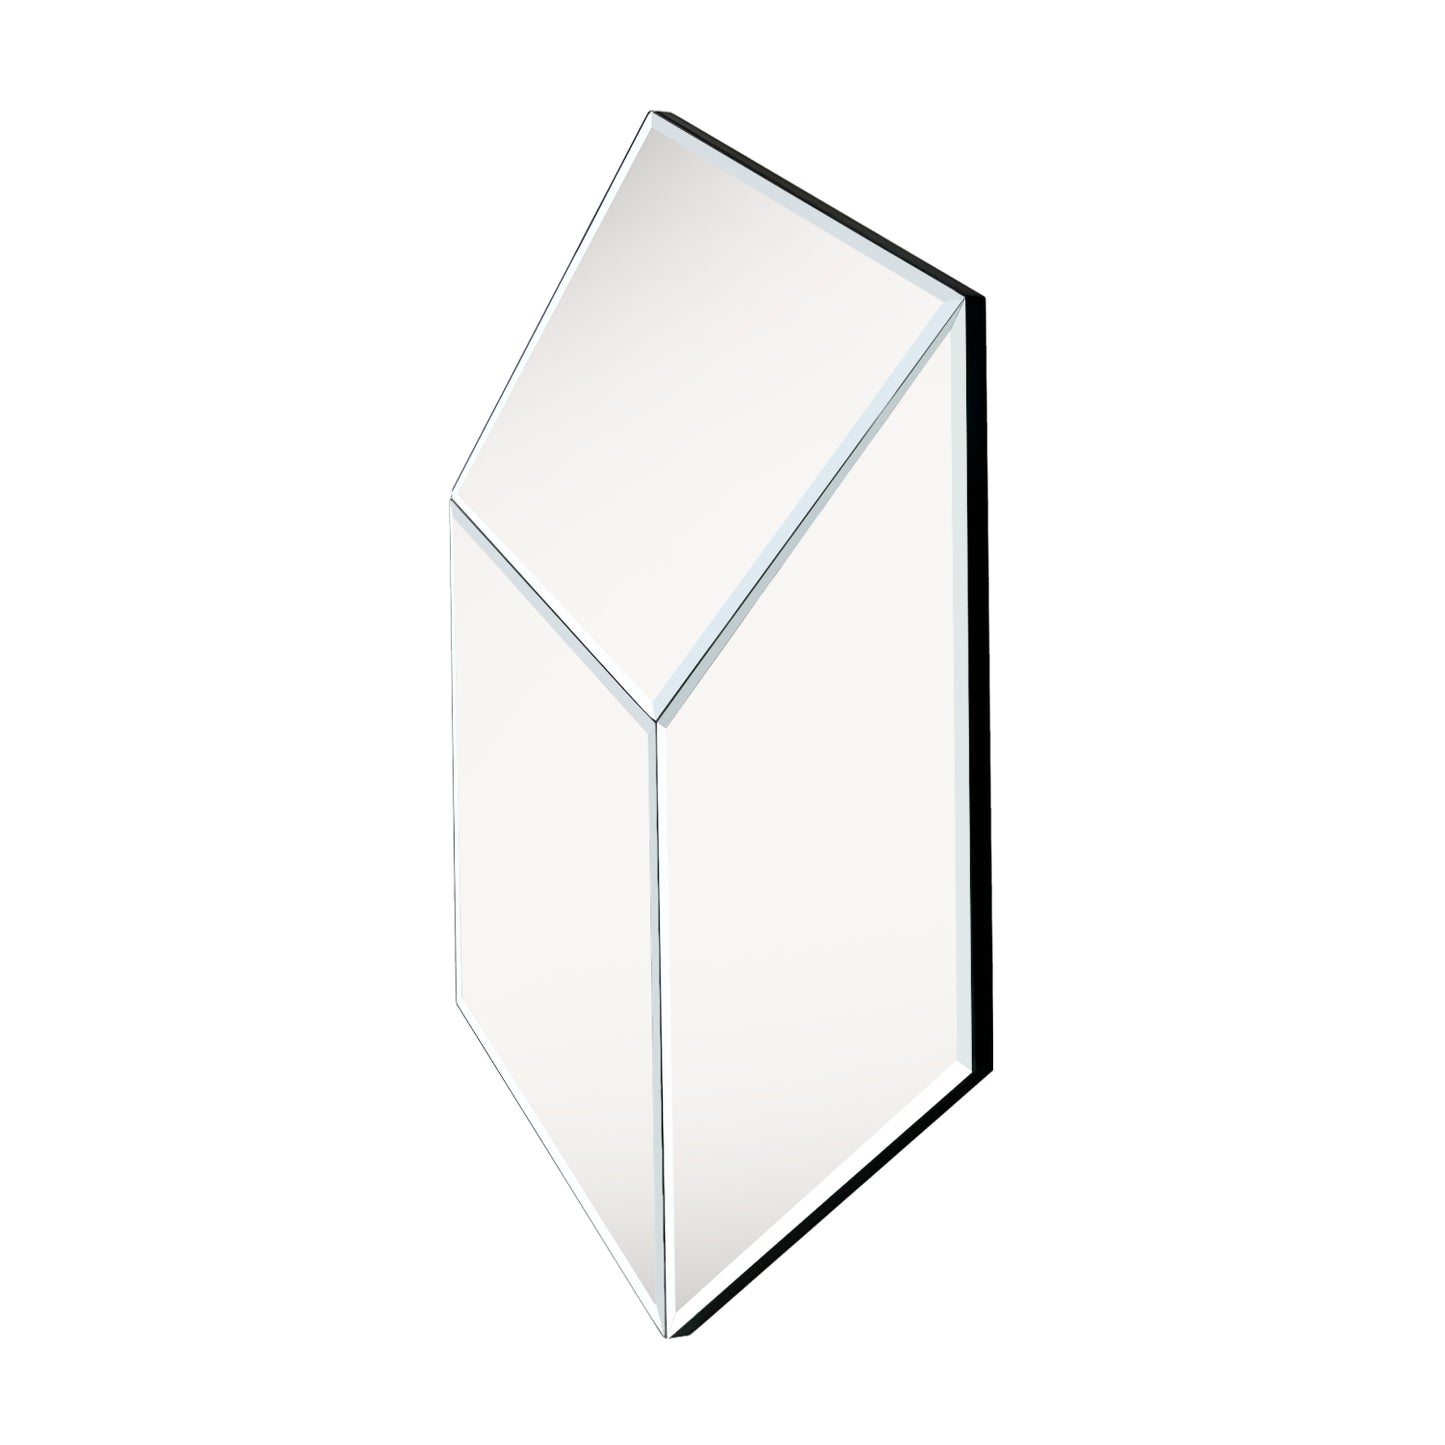 Mosaic Isometric XL - Mirror - Reversible - Contemporary Wall Art